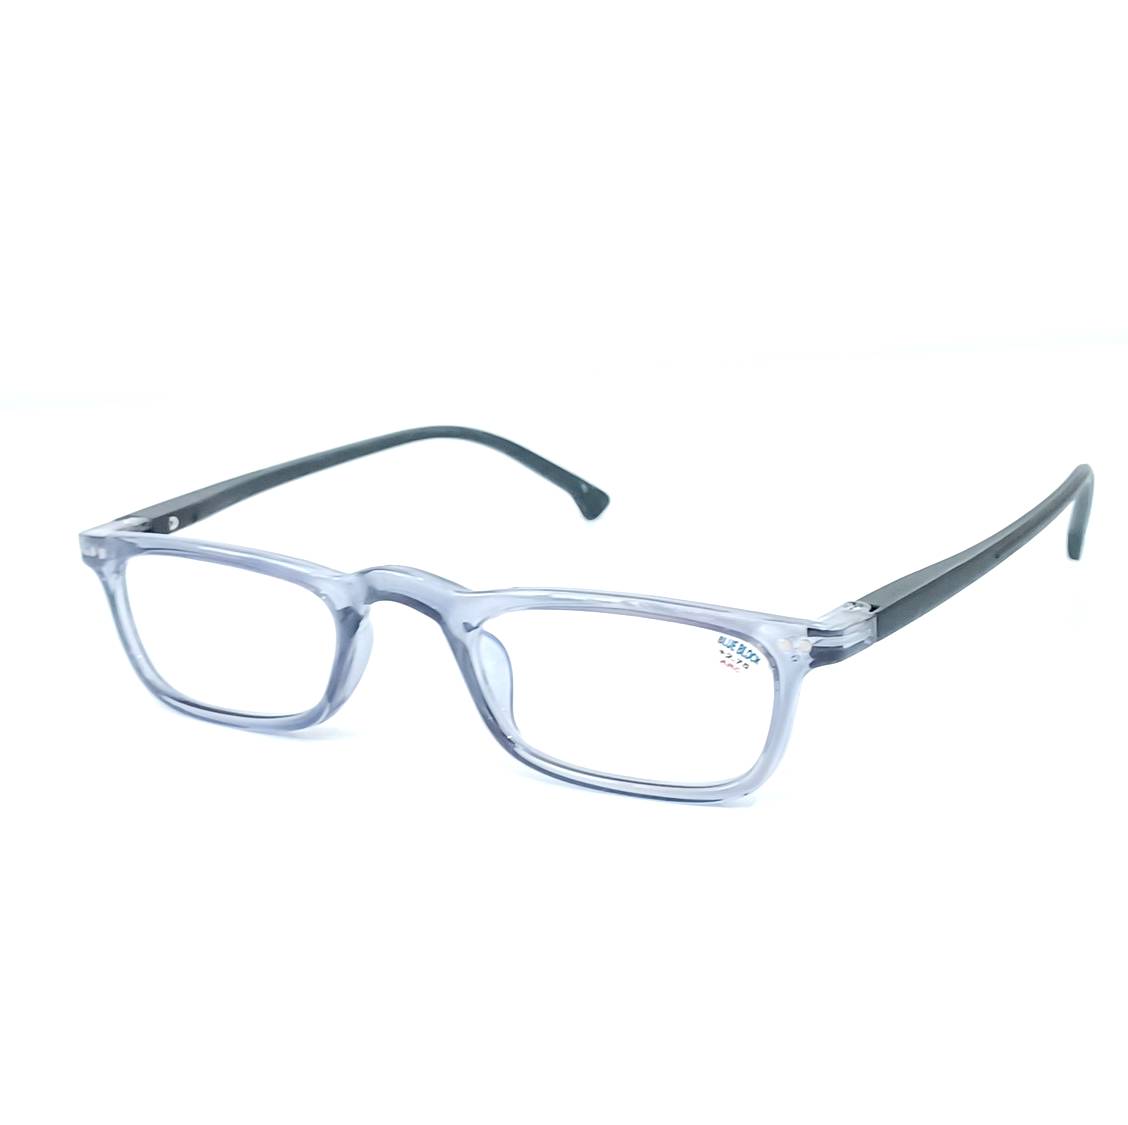 Computer Reading Glasses with Anti Glare Blue Light Lenses